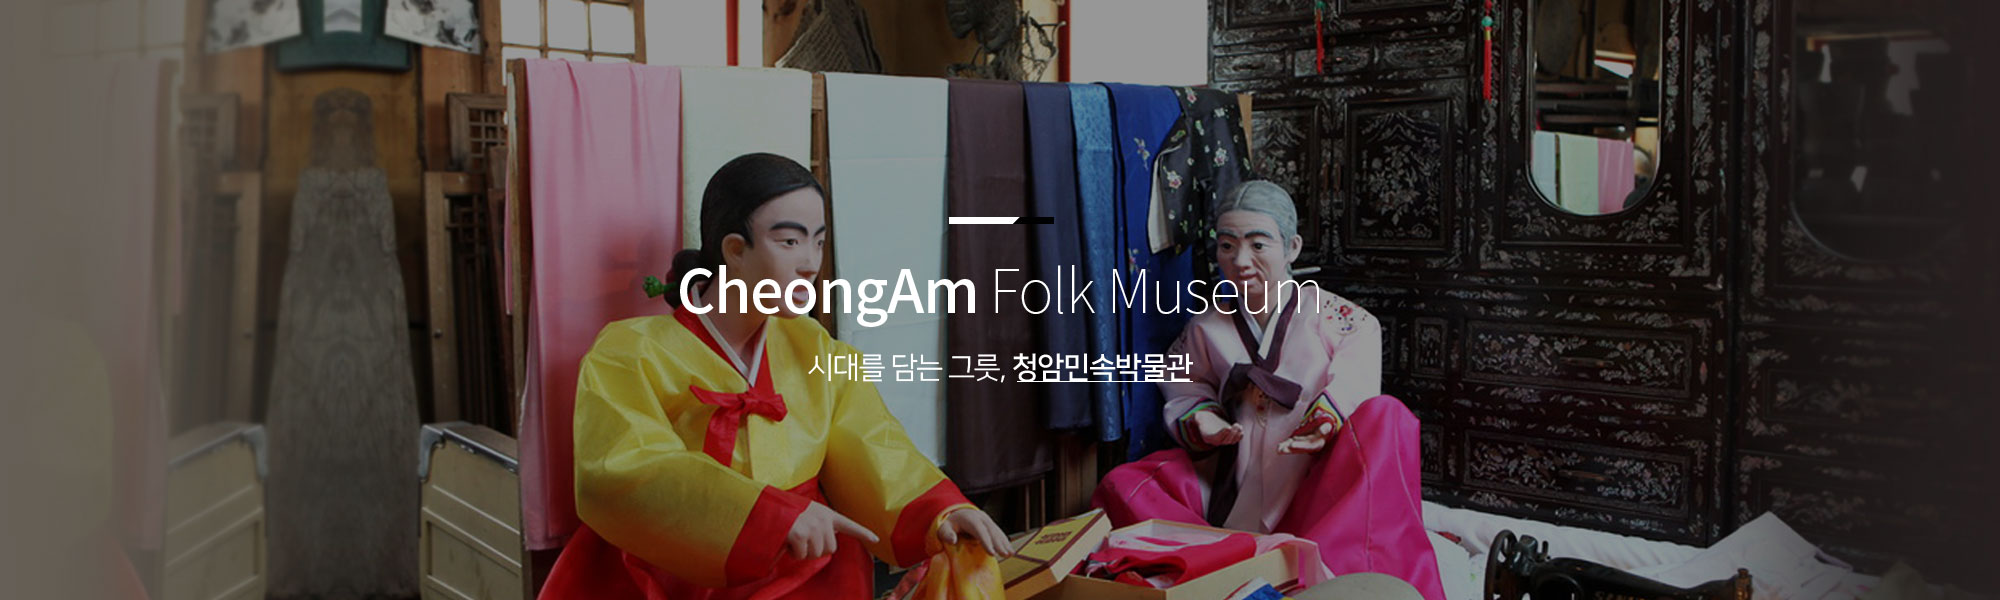 CheongAm Folk Museum 시대를 담는 그릇, 청암민속박물관